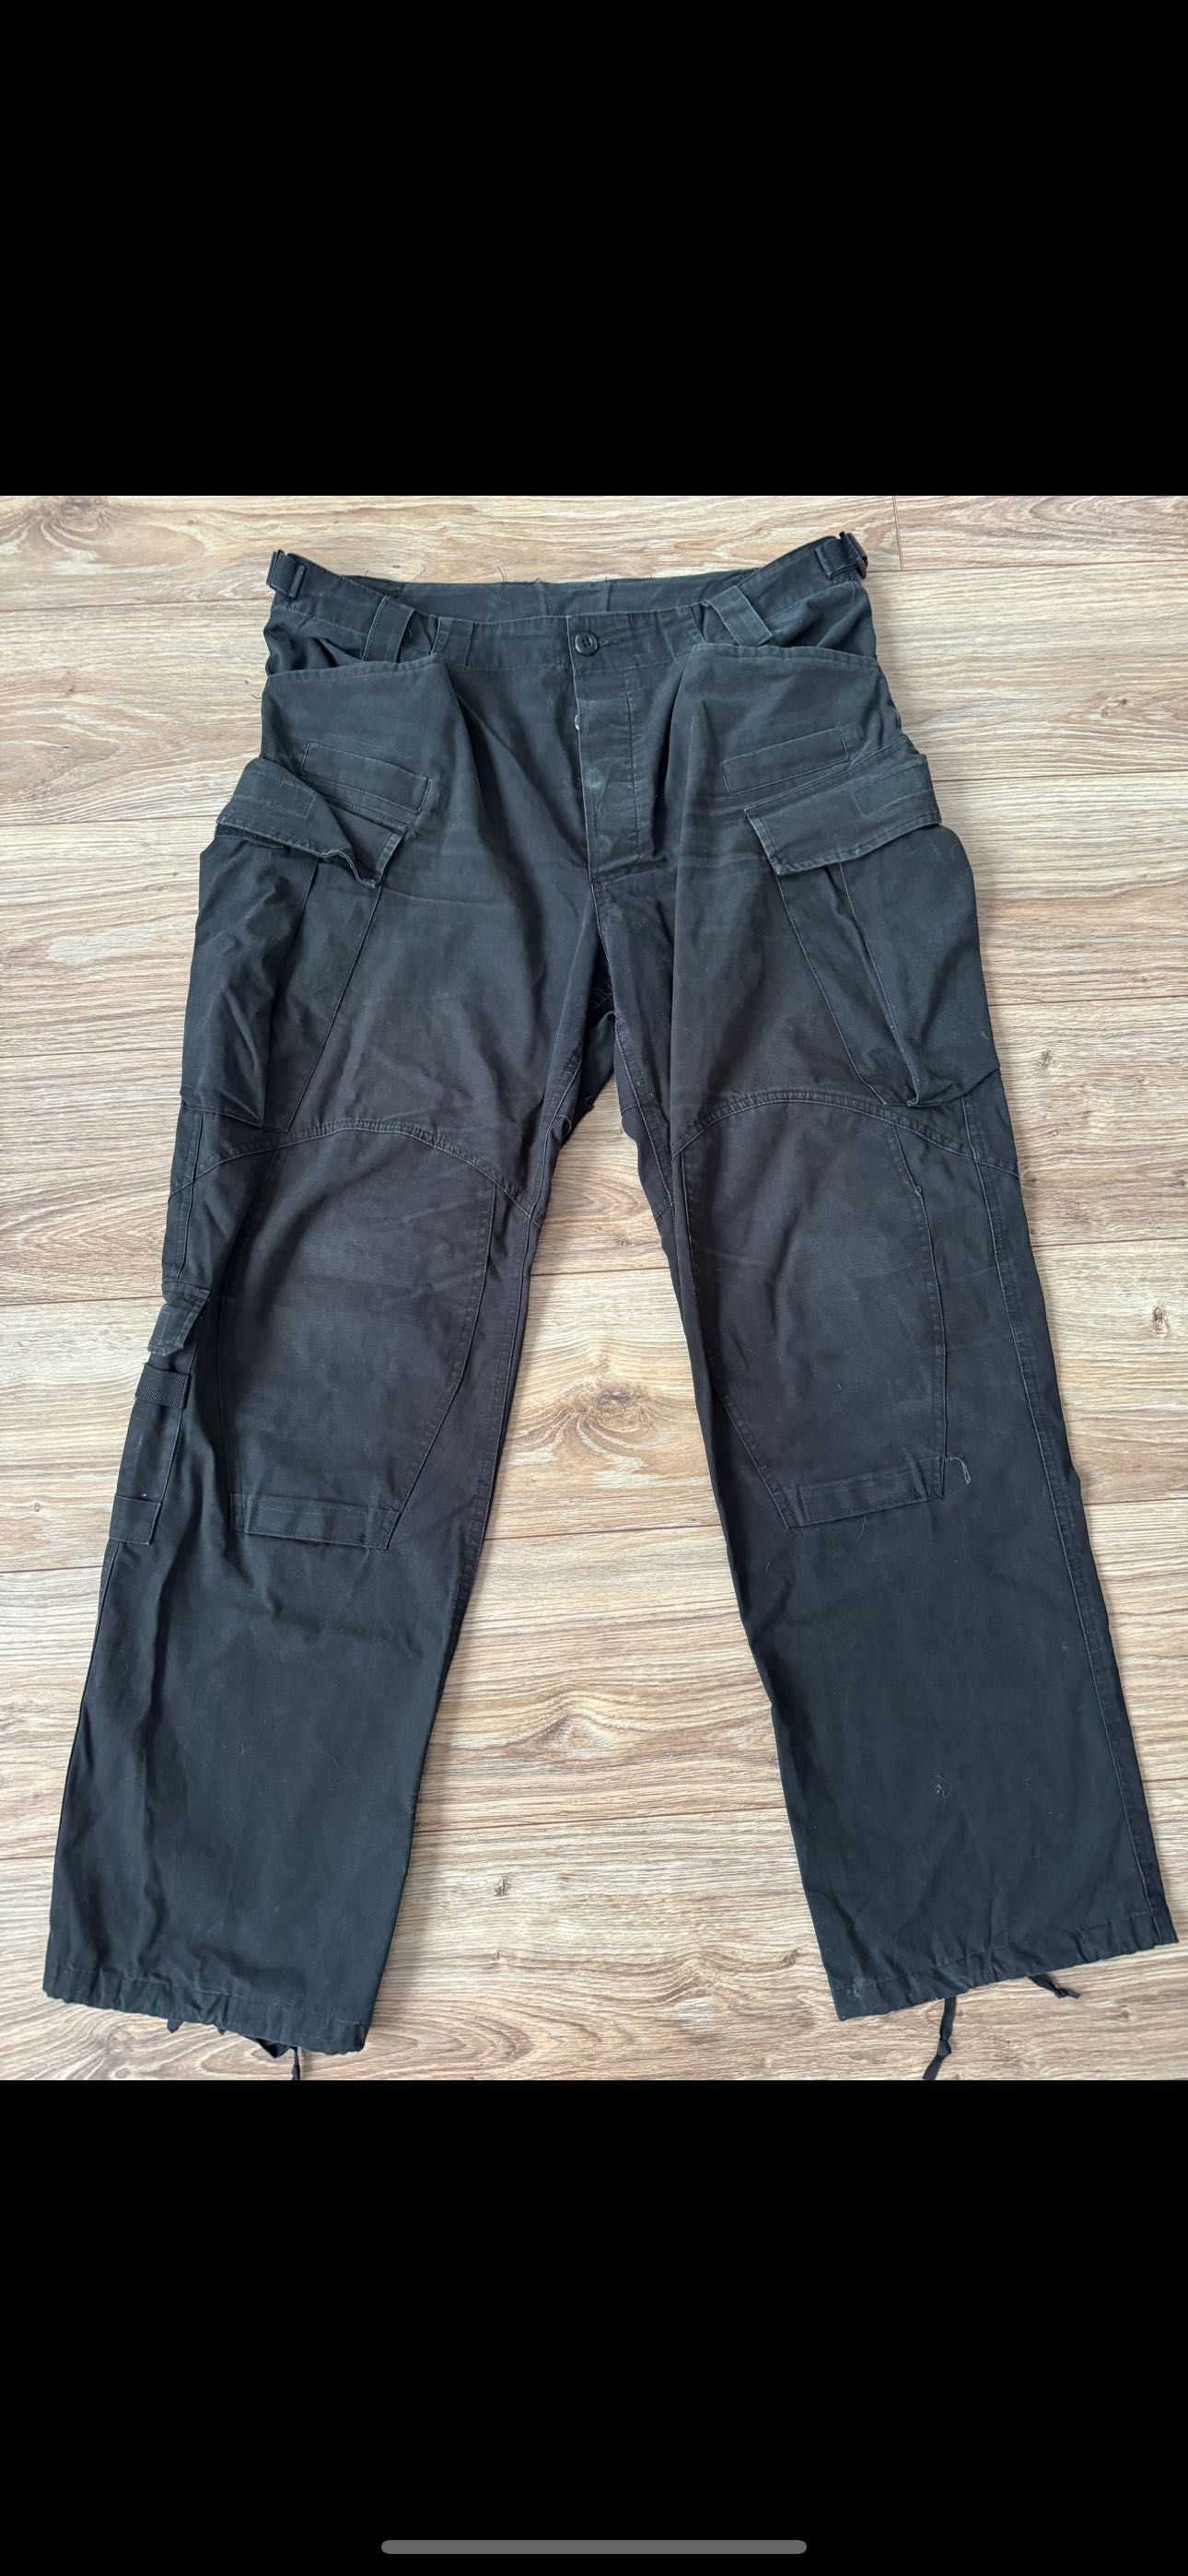 Bluza Striker Field Shirt Black XL plus spodnie